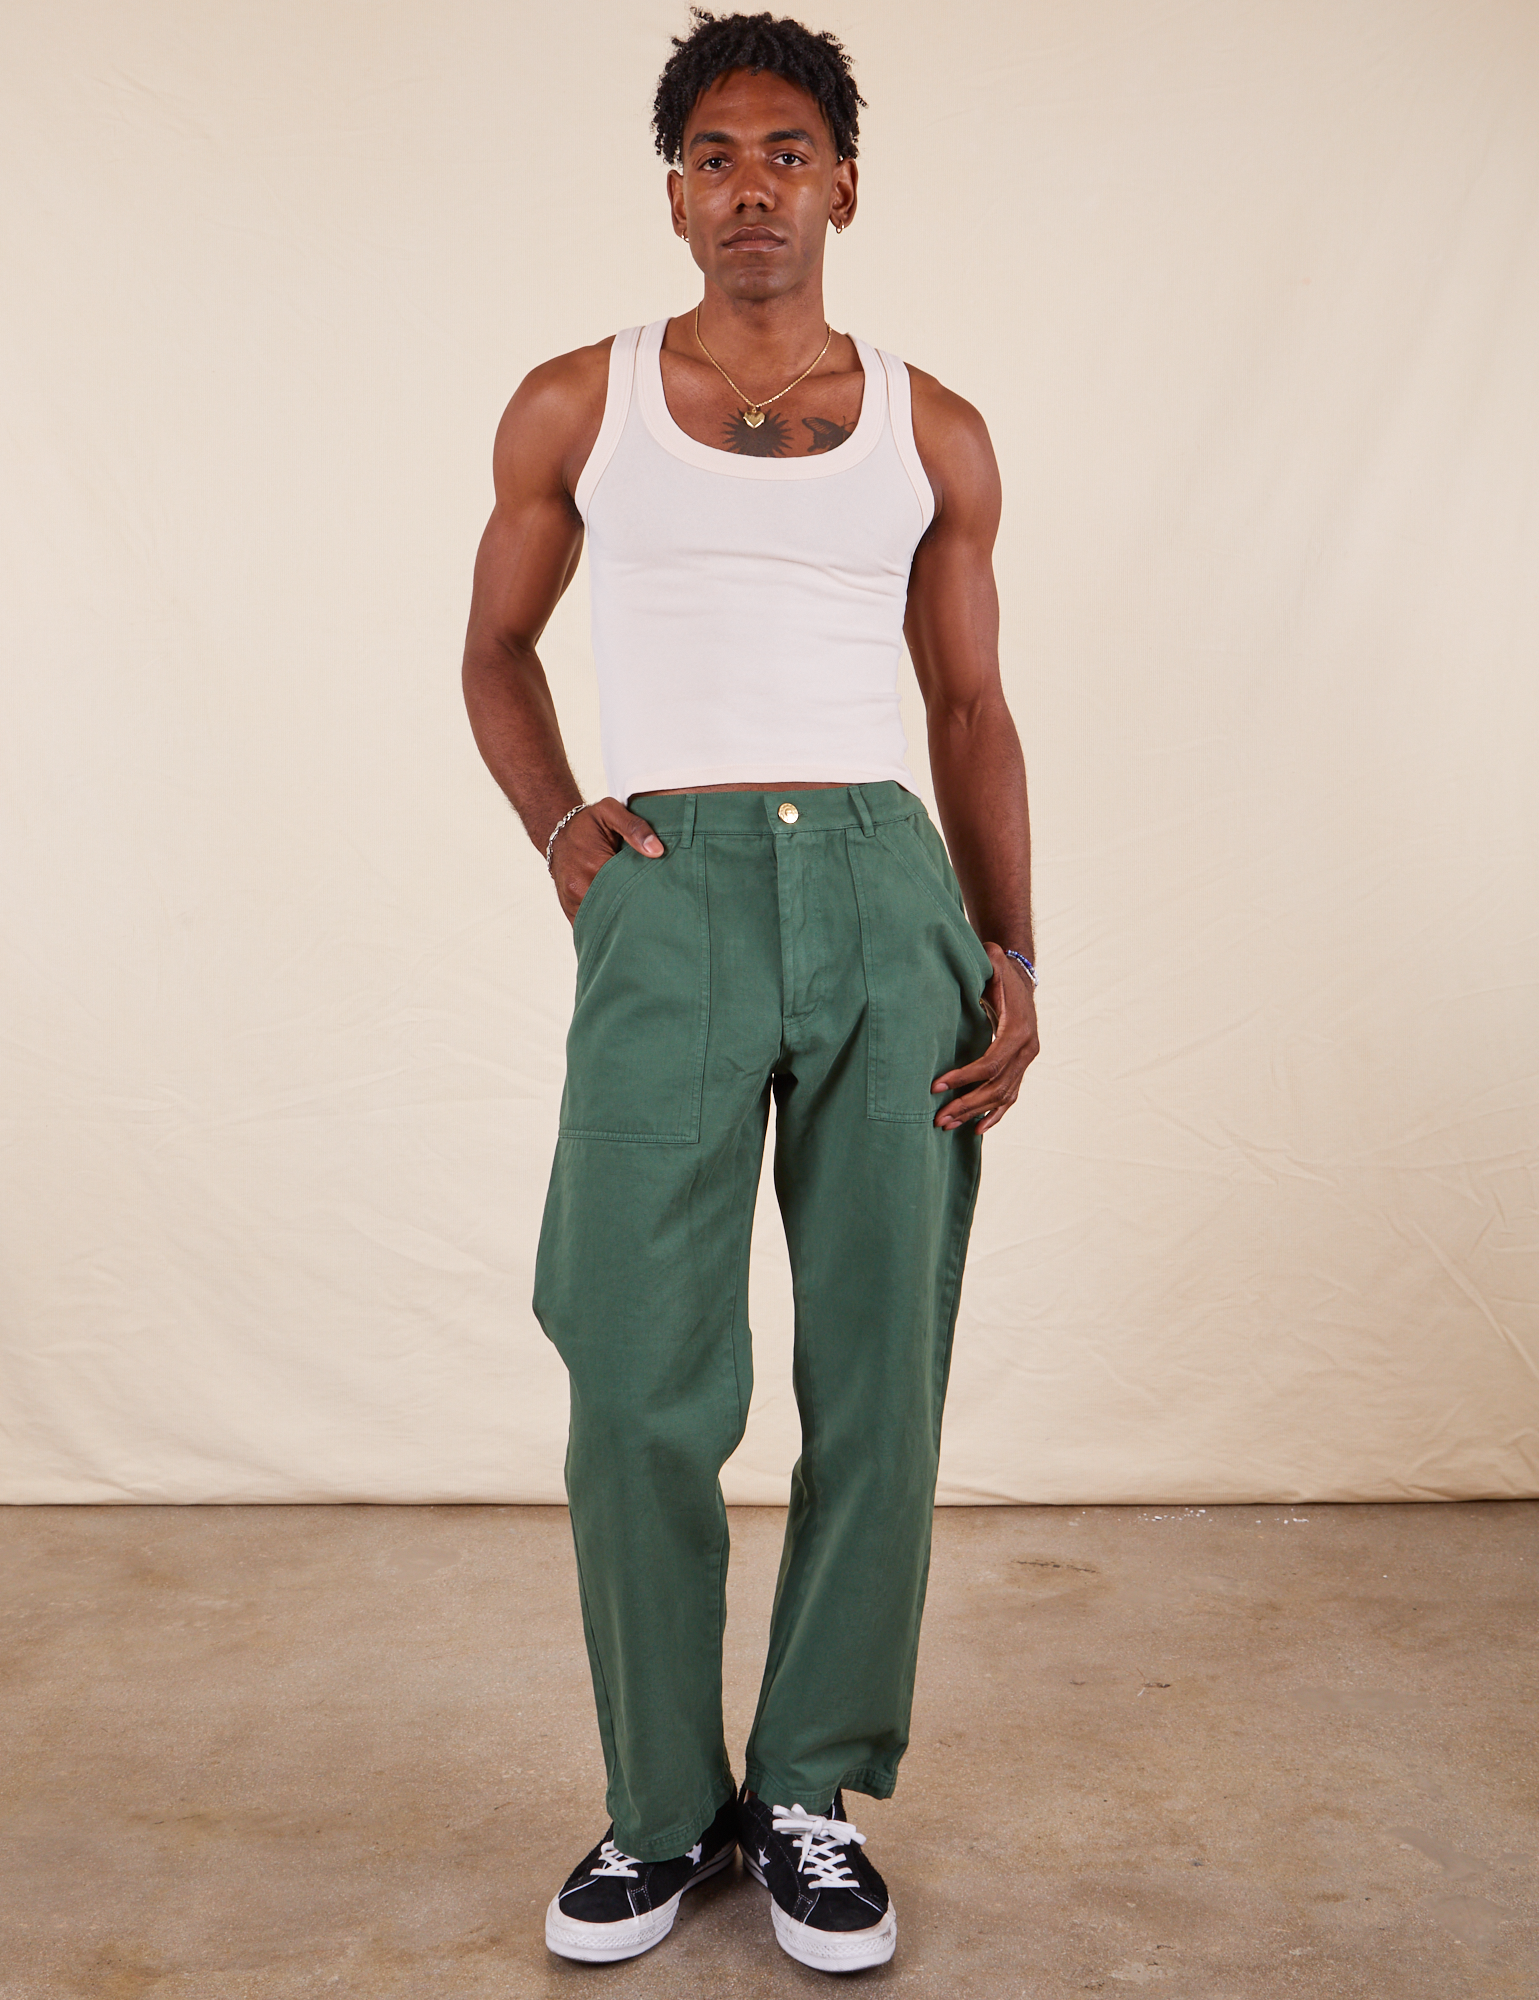 Jerrod is 6&#39;3&quot; and wearing Long S Work Pants in Dark Emerald Green